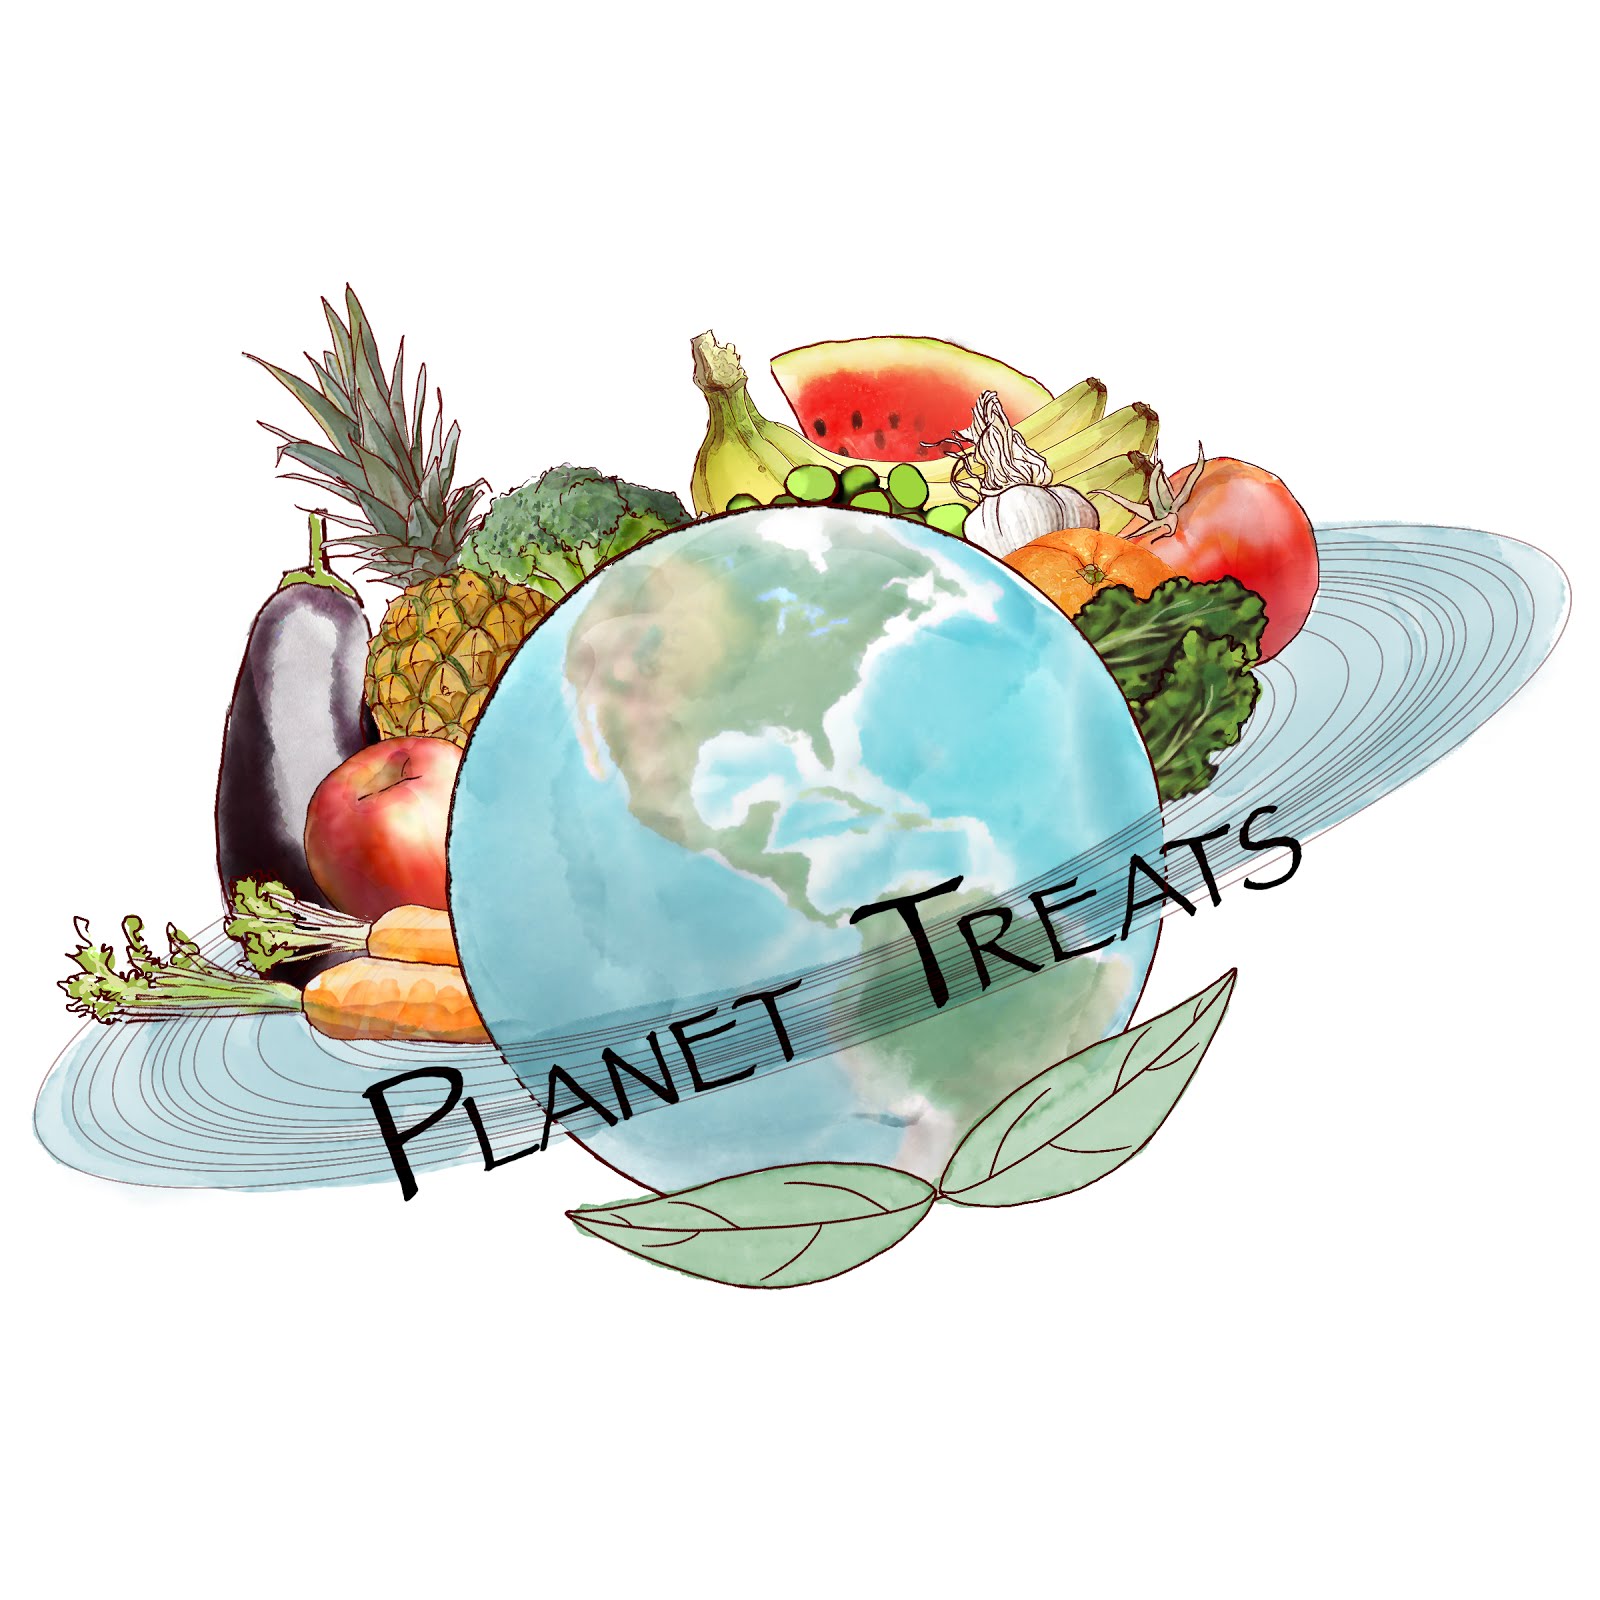  Planet Treats